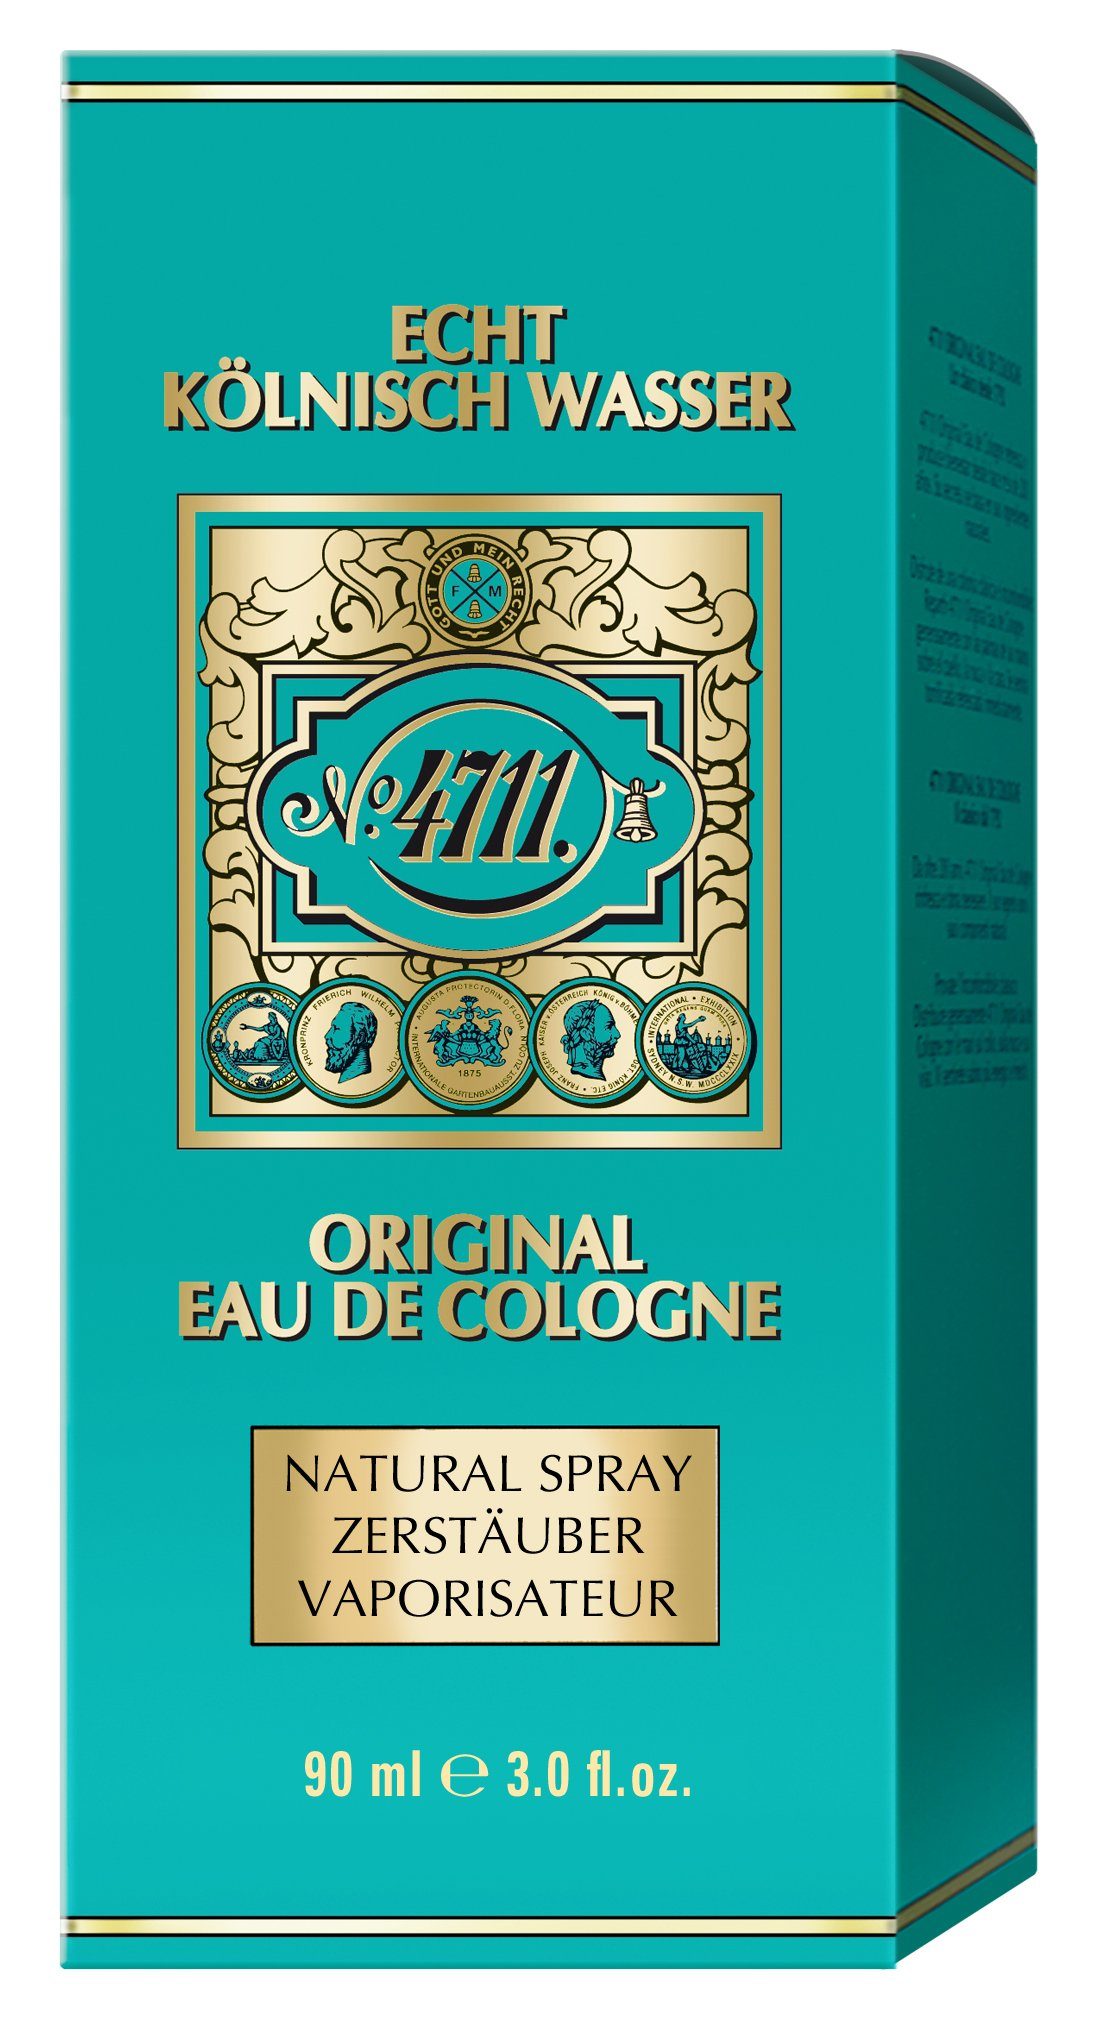 4711 Eau de Eau Cologne Echt Kölnisch Wasser Natural 4711 ml Cologne de 90 Spray